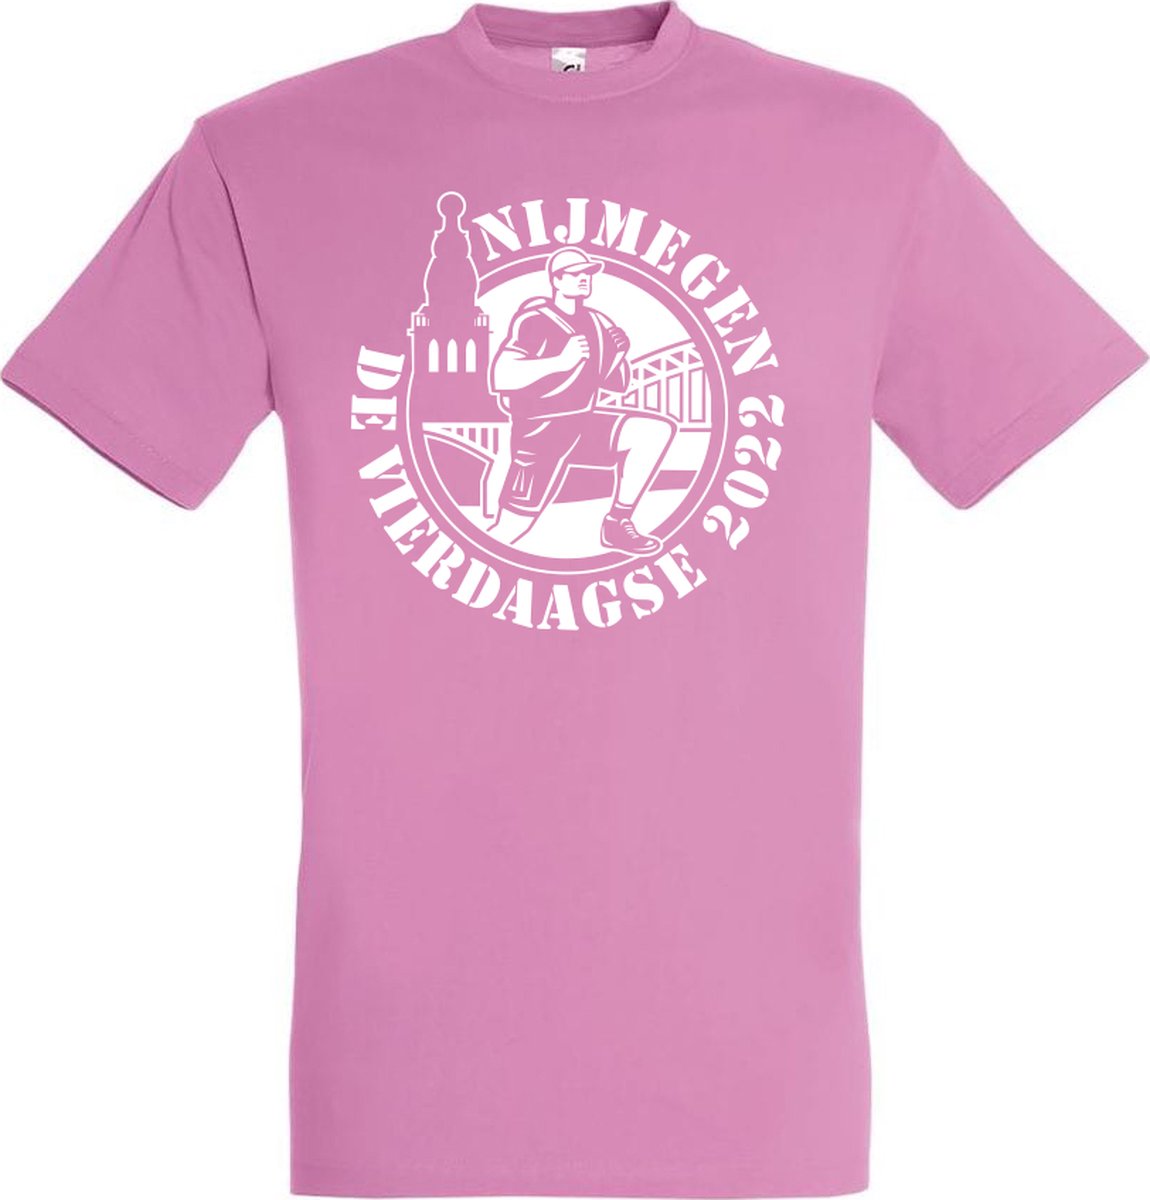 T-shirt CartoonShirt De Vierdaagse |Wandelvierdaagse | Vierdaagse Nijmegen | Roze woensdag | Roze | maat L